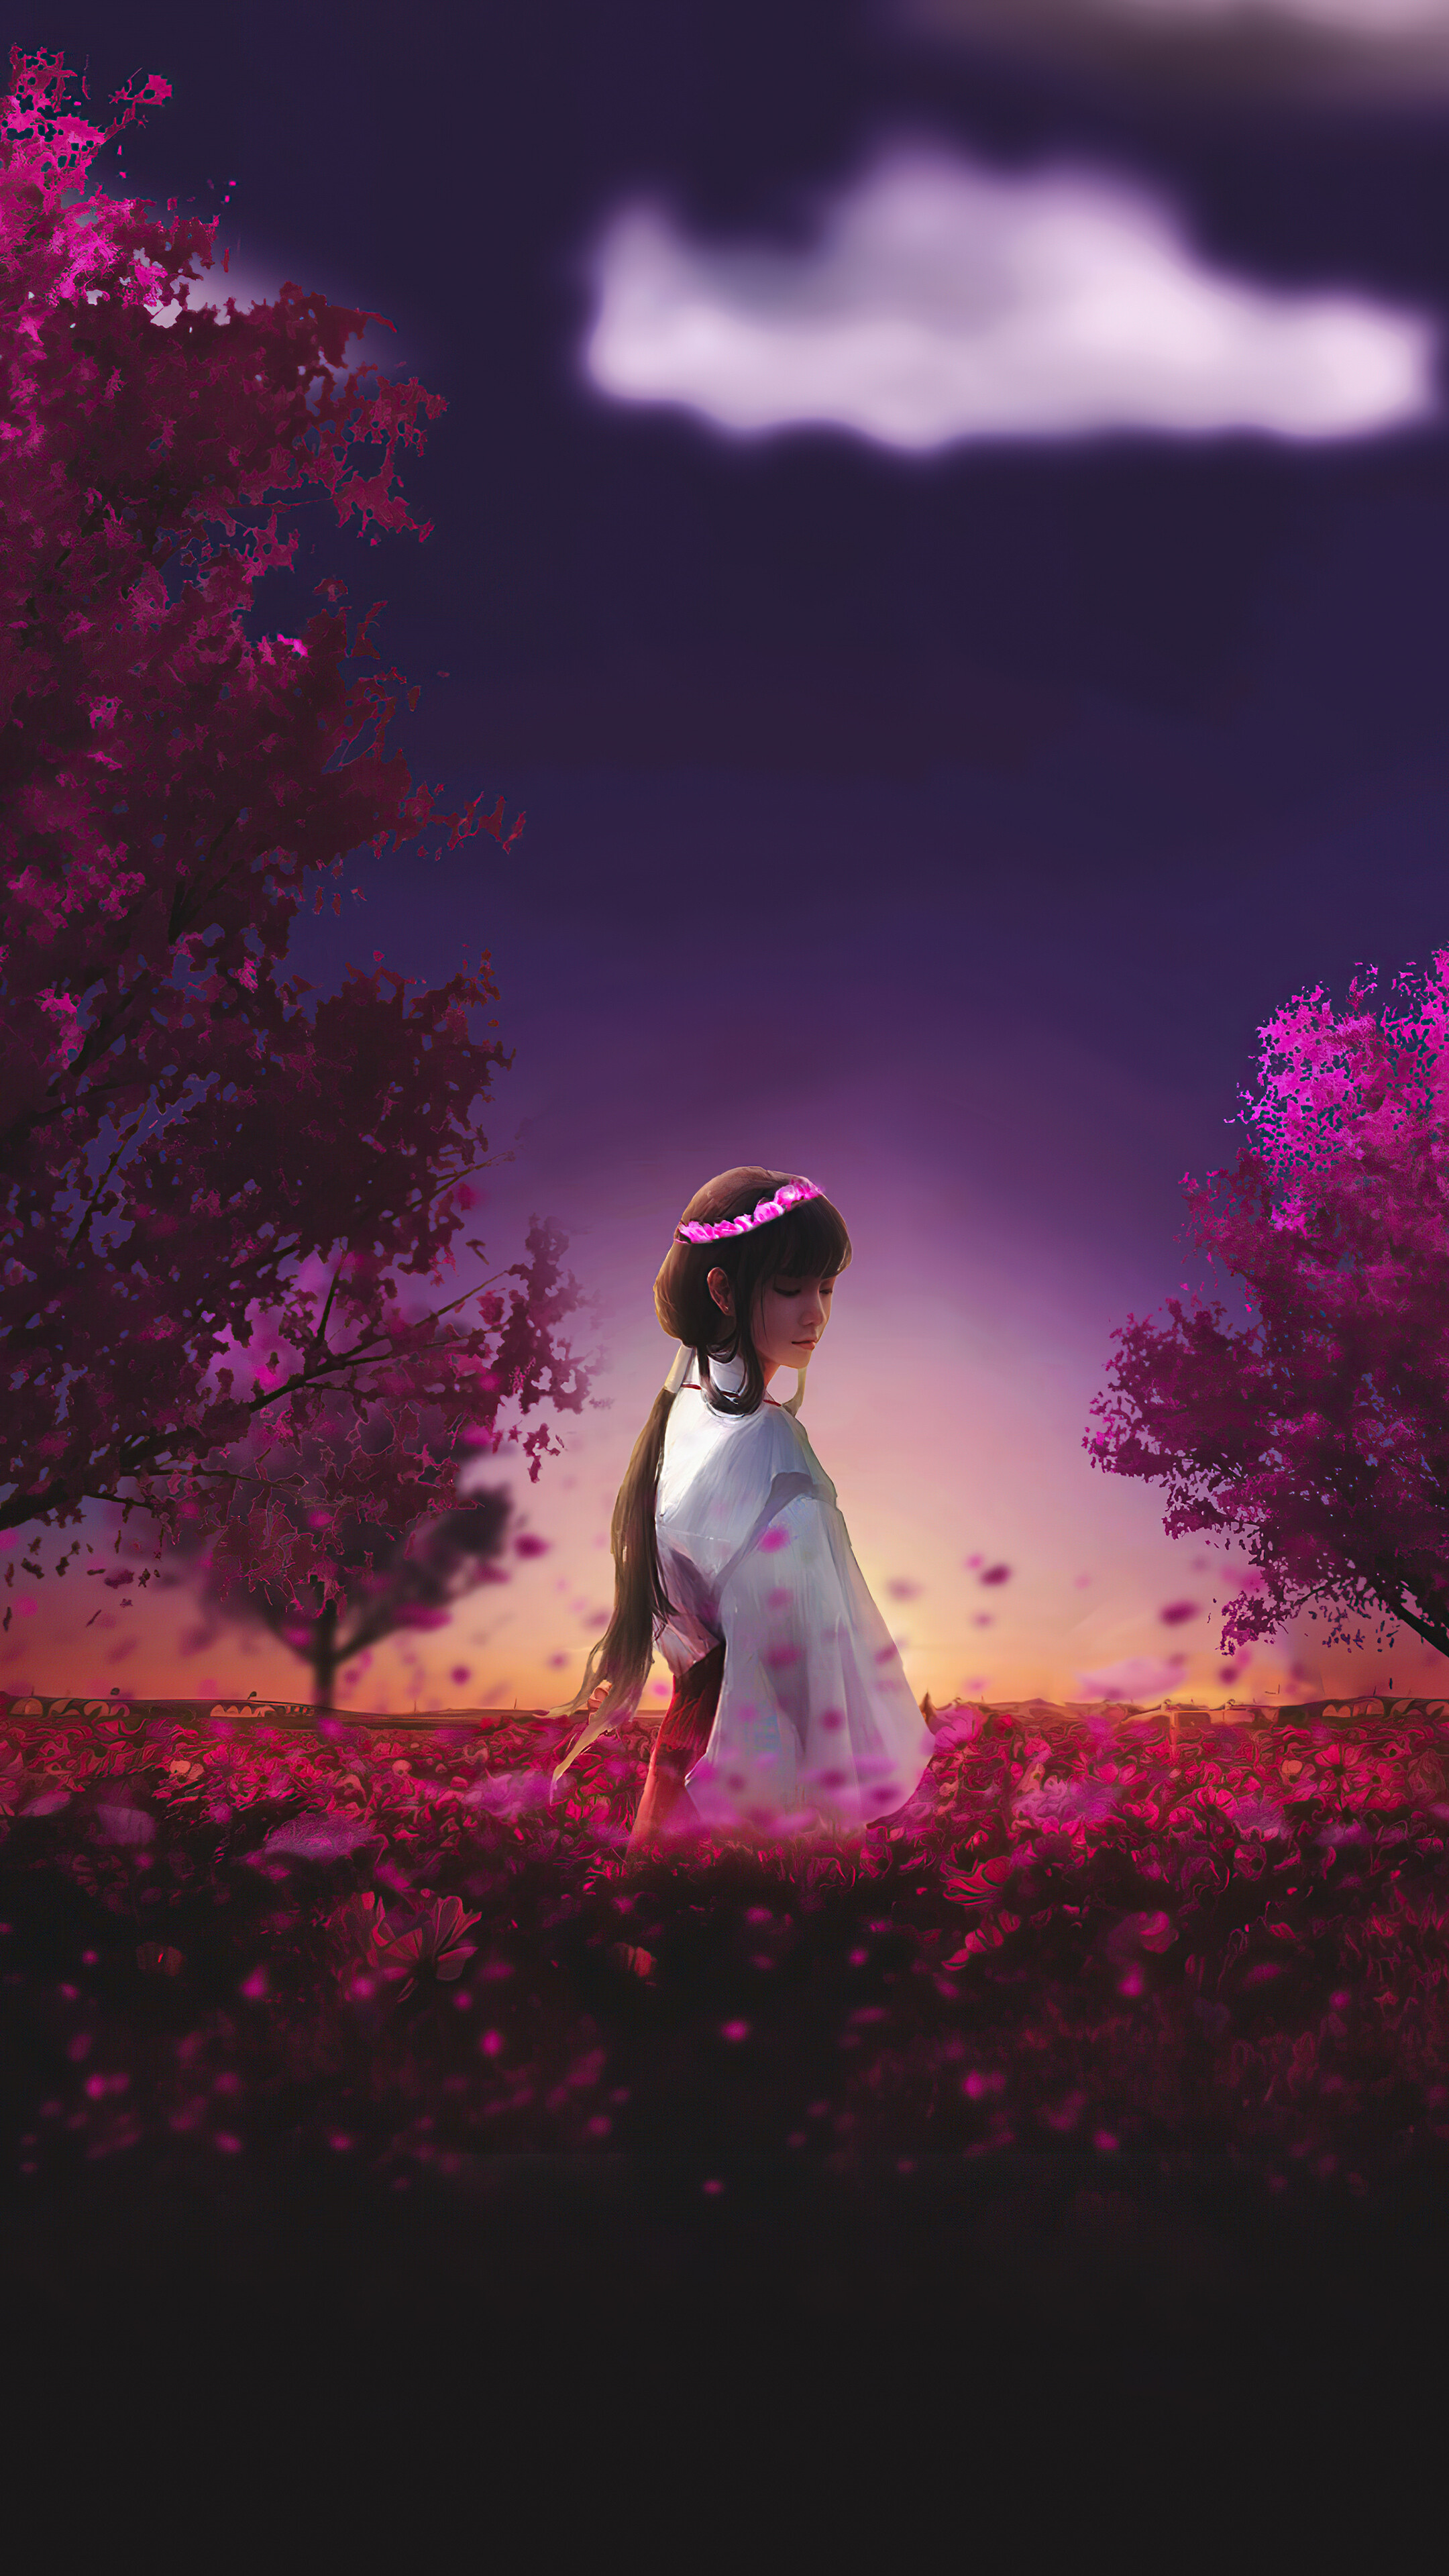 Girly: Ancient anime girl, Traditional Japanese dress, Kimono, The field of purple flowers. 2160x3840 4K Wallpaper.